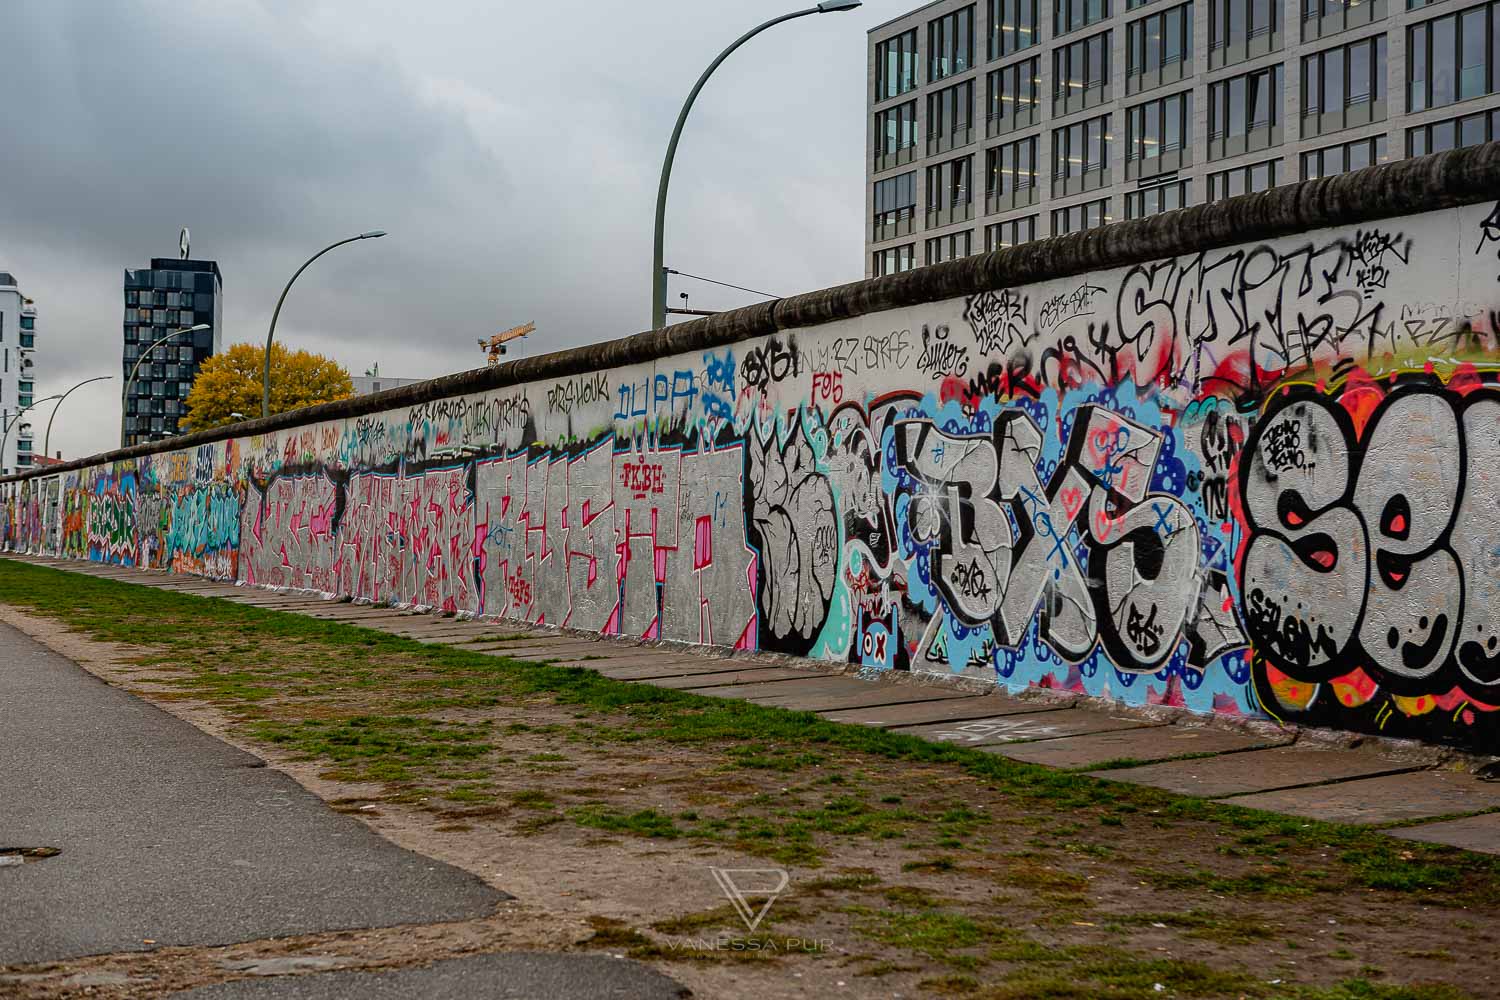 Berlin Graffiti Tour - Sights Alternative Berlin Tours - Berlin Grafitti Tour - the other side of Berlin - city tour - Berlin sights in the backyards